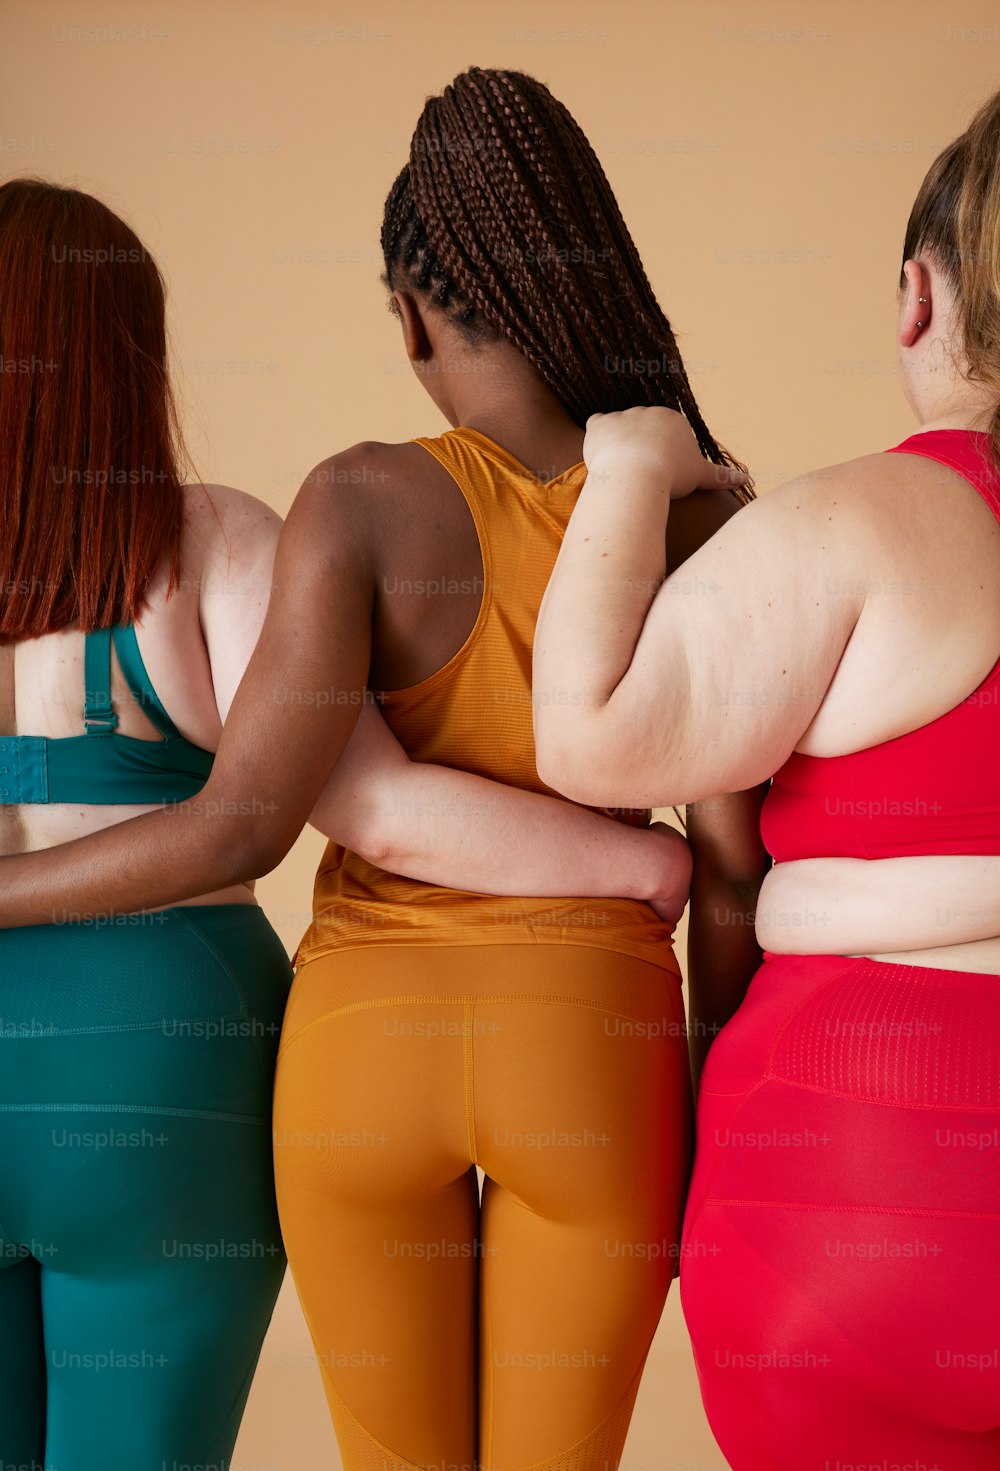 Premium Photo  Two women wearing activewear holding yoga mats standing in  sport studio